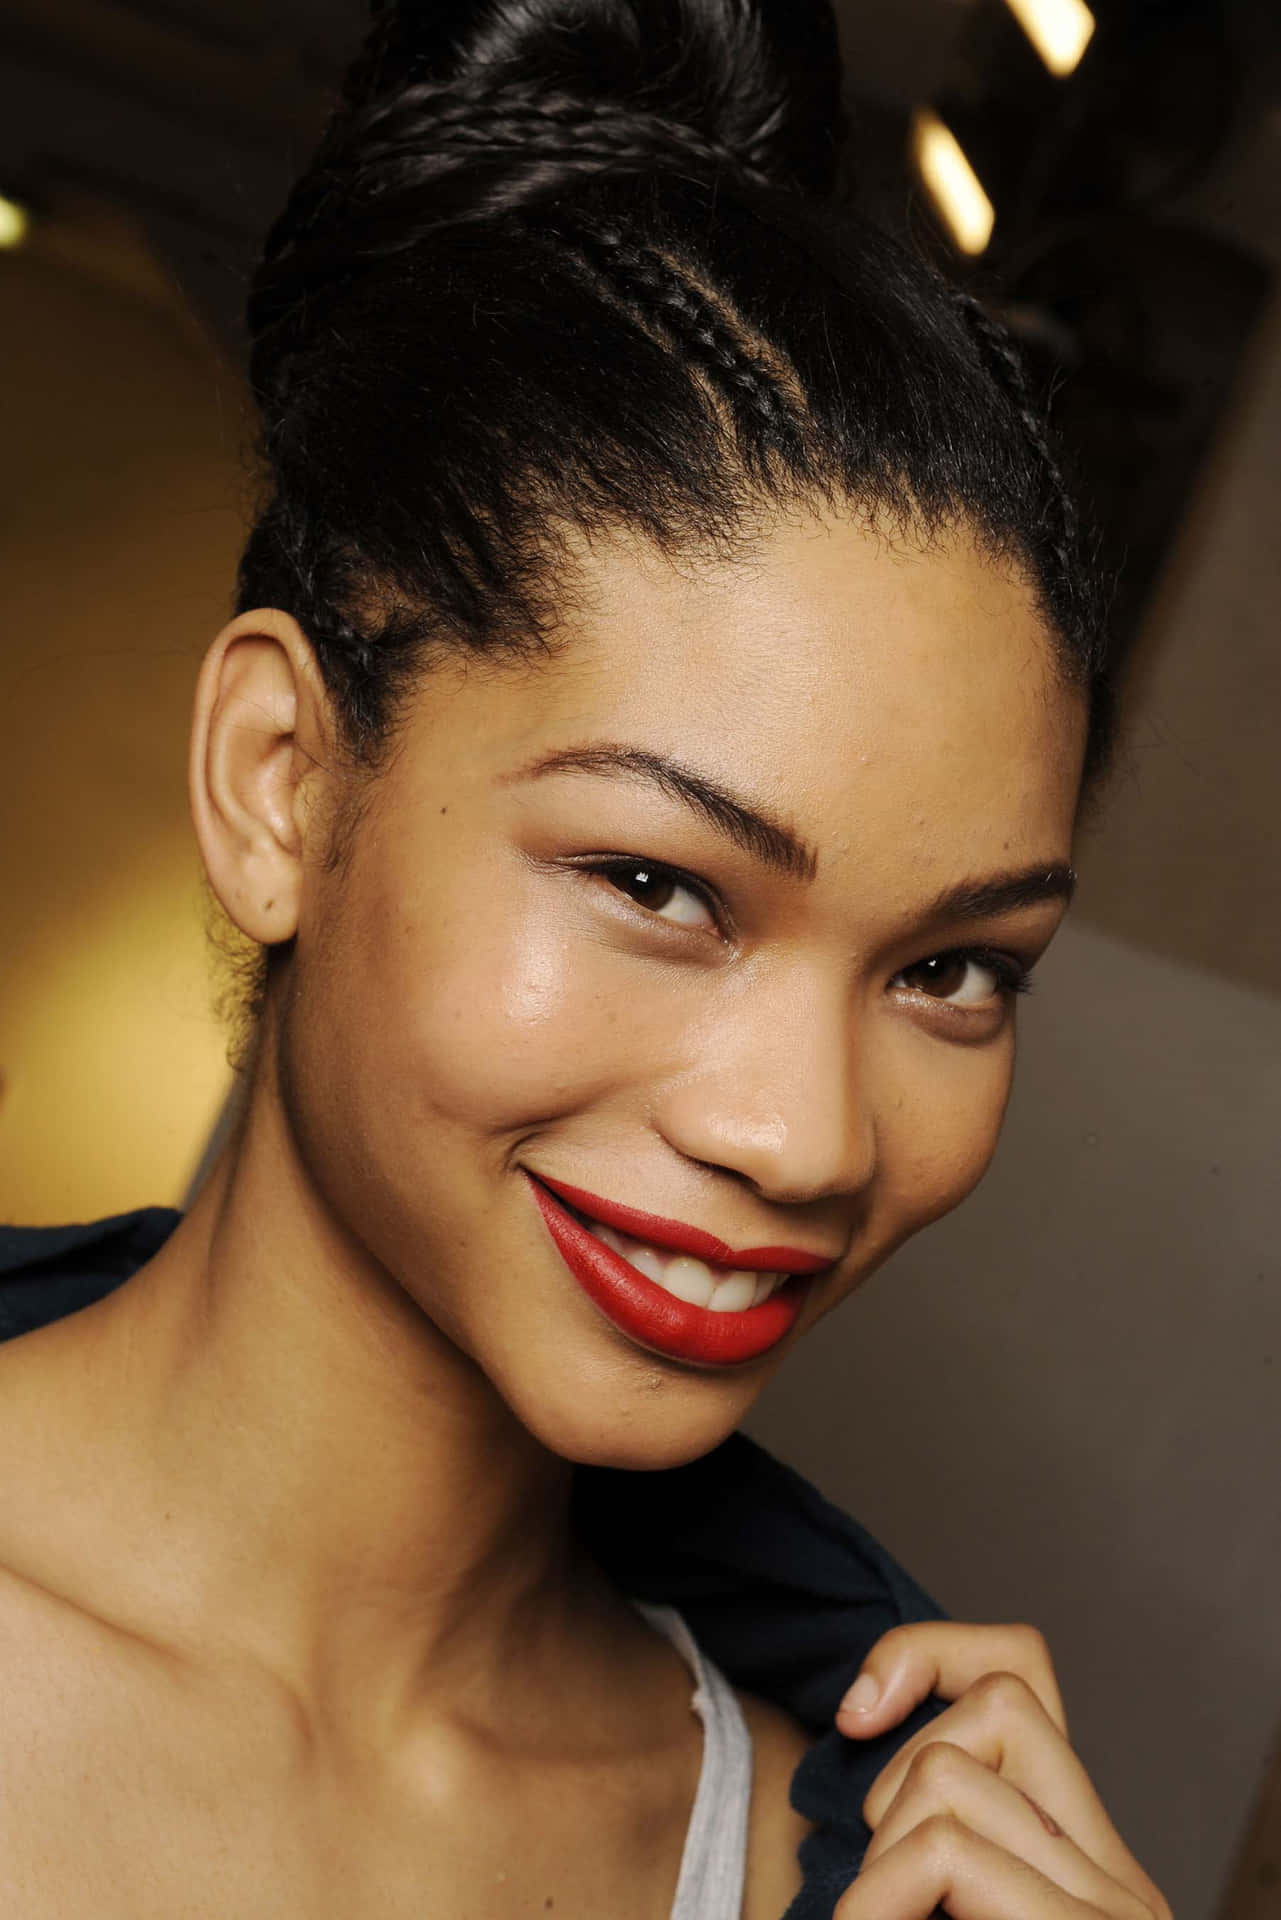 Chanel Iman Red Lipstick Smile Wallpaper